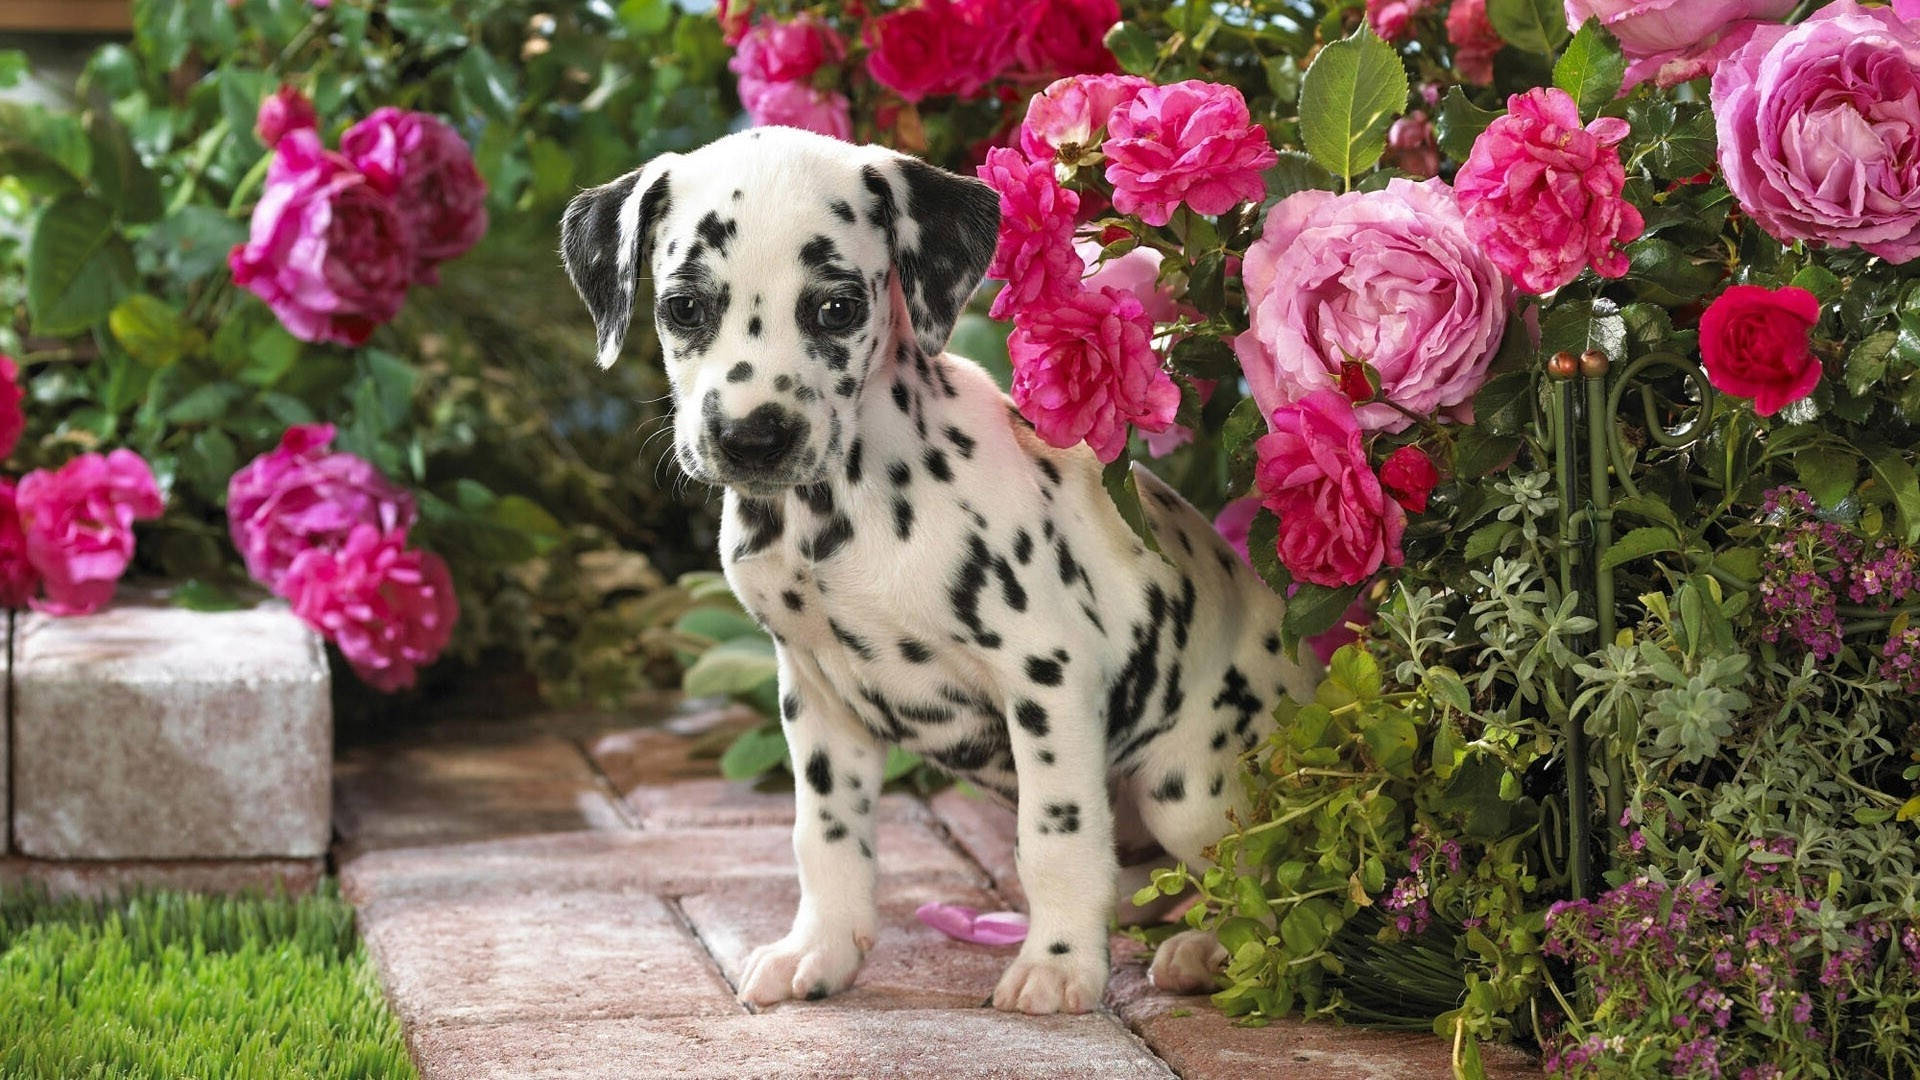 Dalmatian Puppy Among Pink Roses